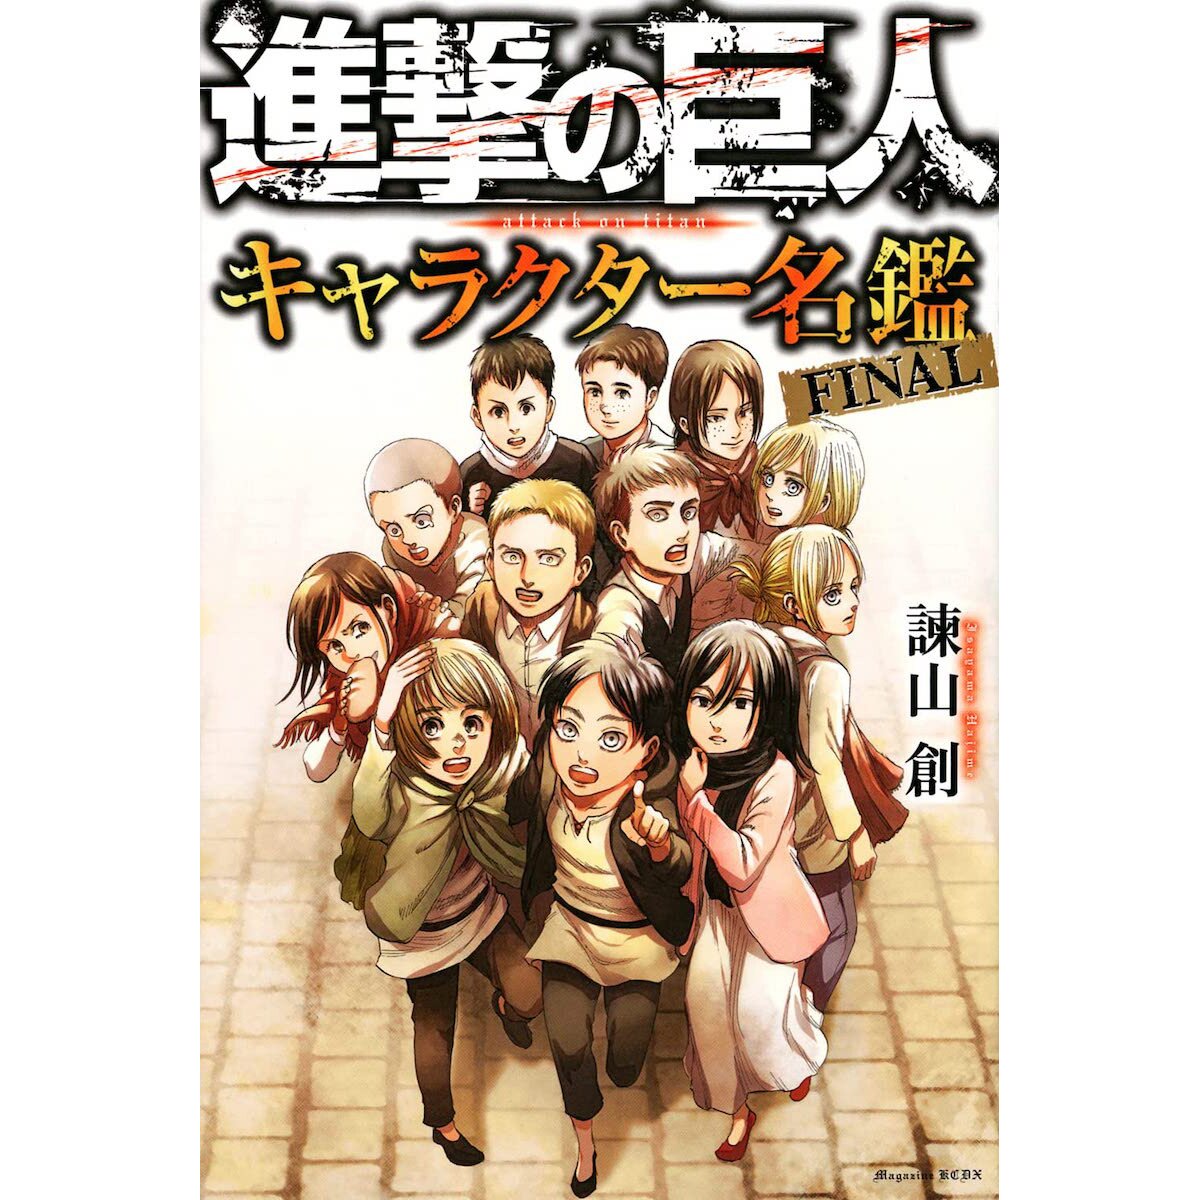 Preview of Attack On Titan first art book Shingeki No Kyojin